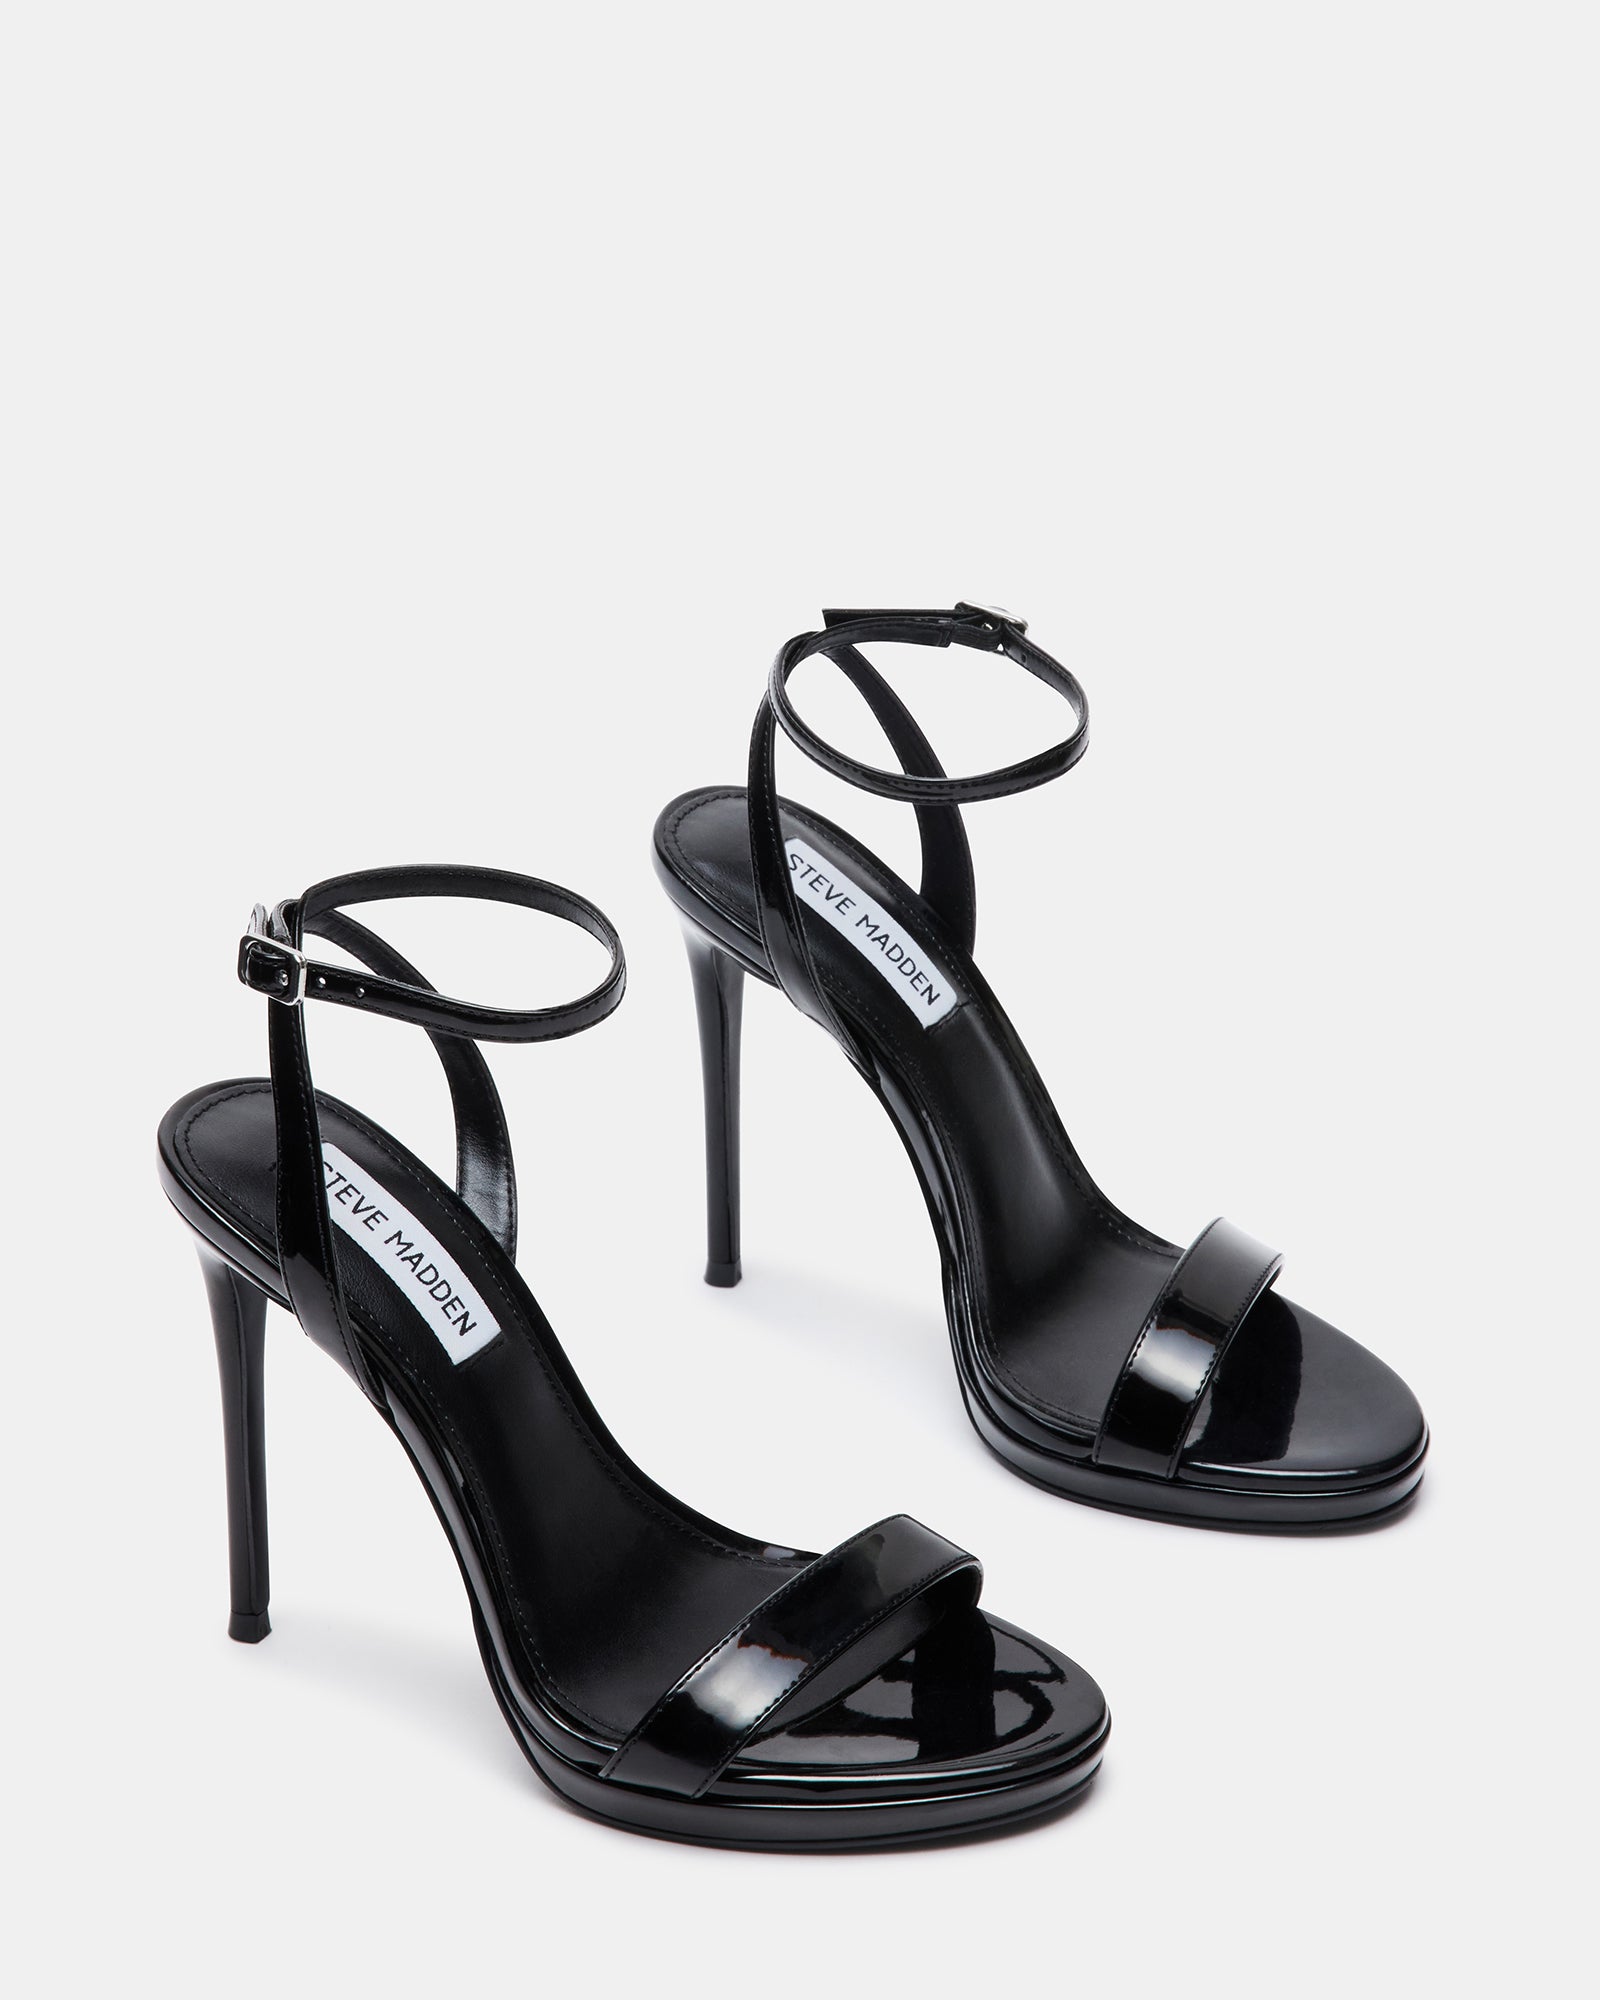 WAFER Black Patent Strappy Heels | Women's Platform Sandals – Steve Madden